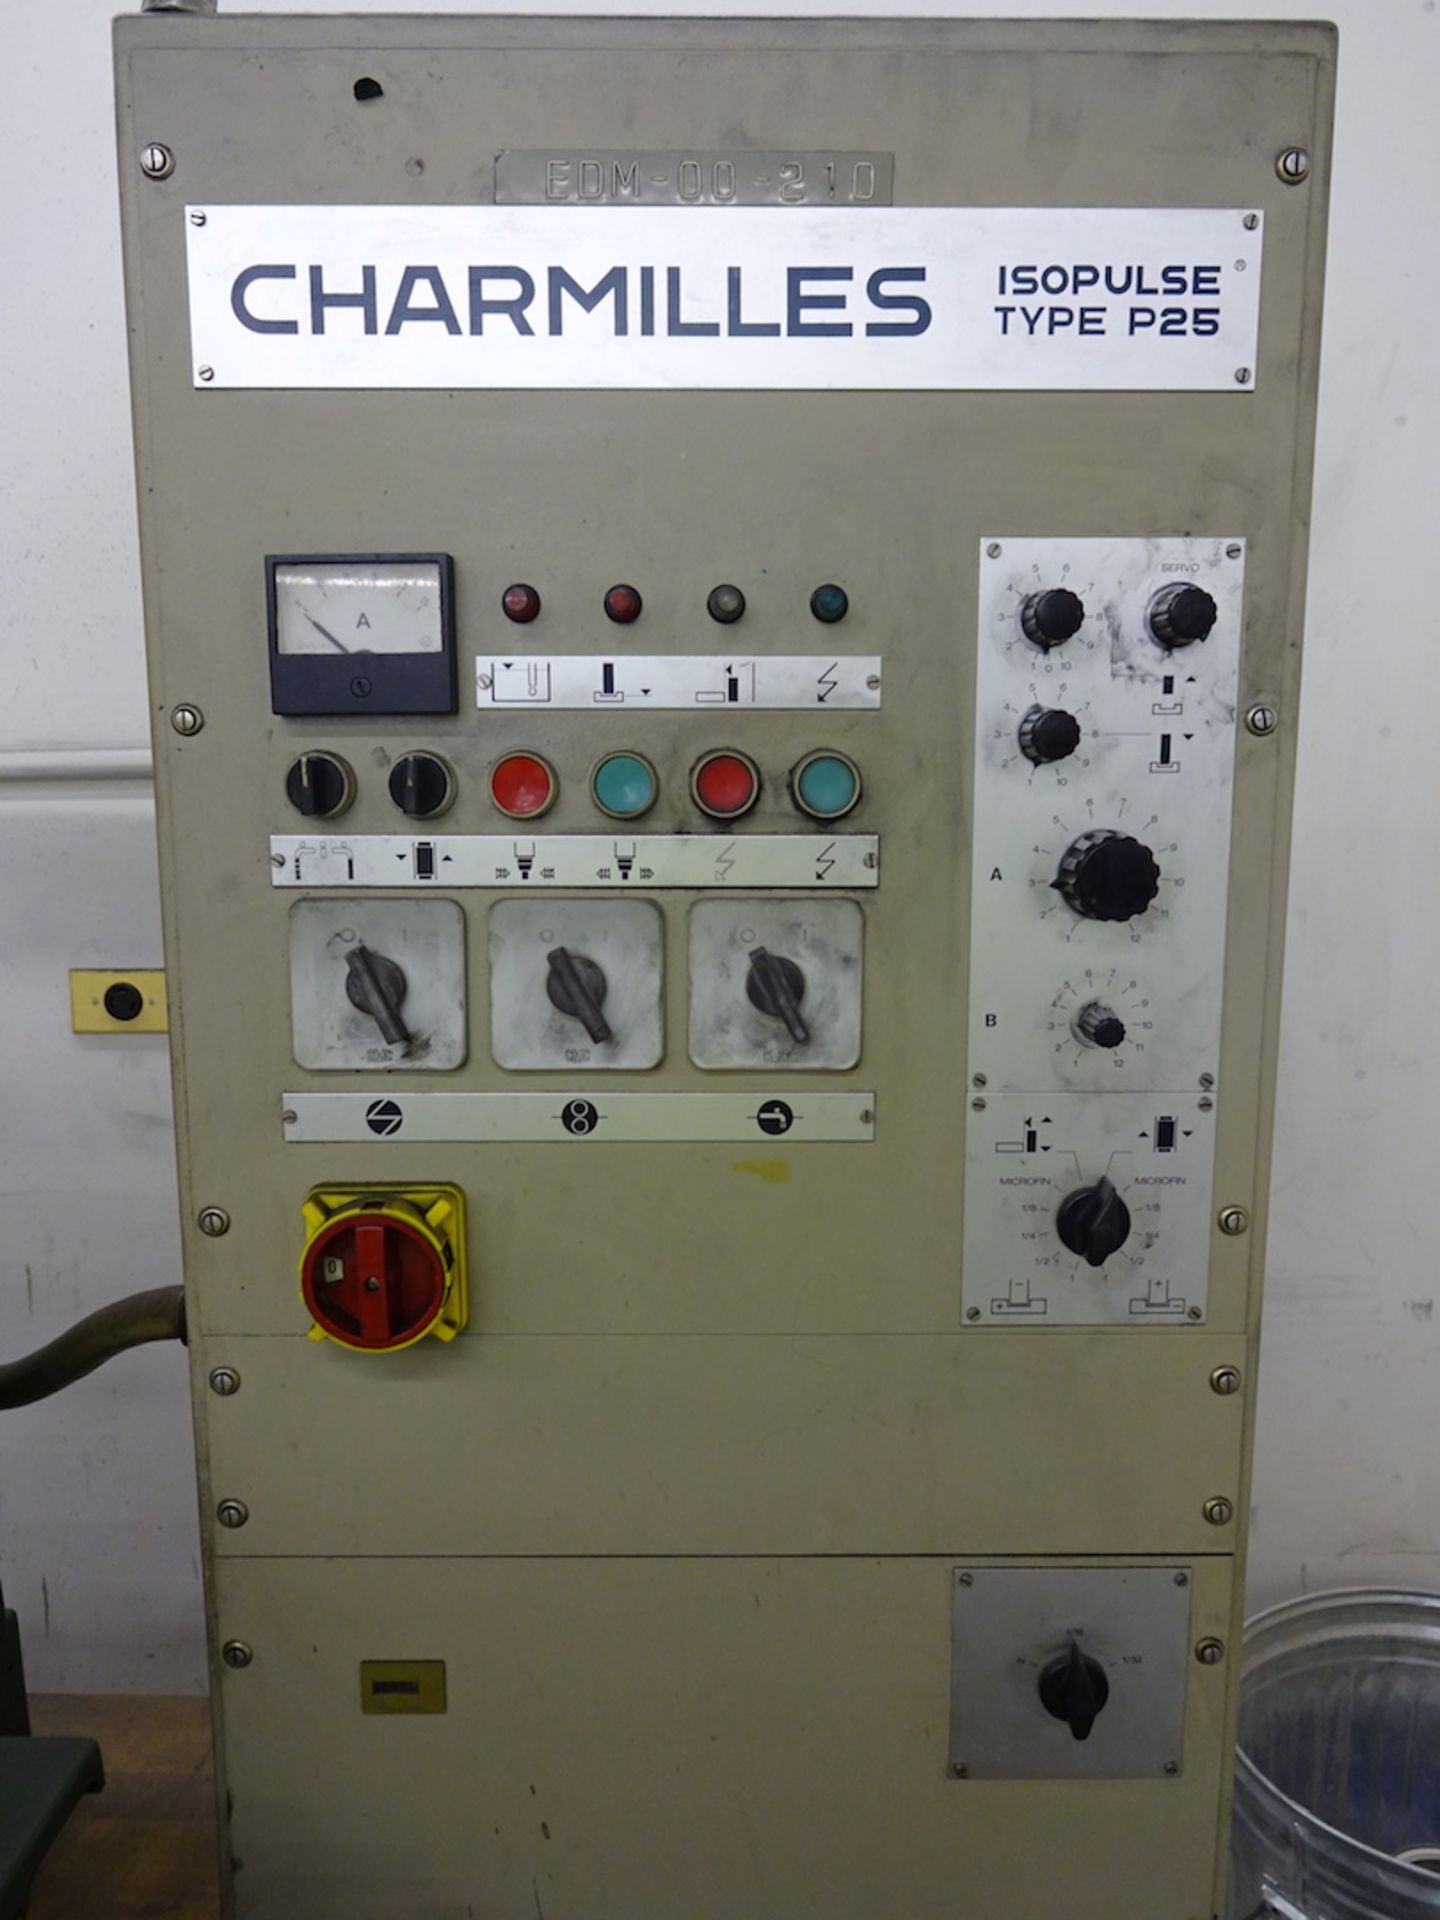 Charmilles Model Eleroda 110 Bench Top EDM Machine, S/N 50962, Isopulse P25 Power Supply, 9 in. x - Image 3 of 6